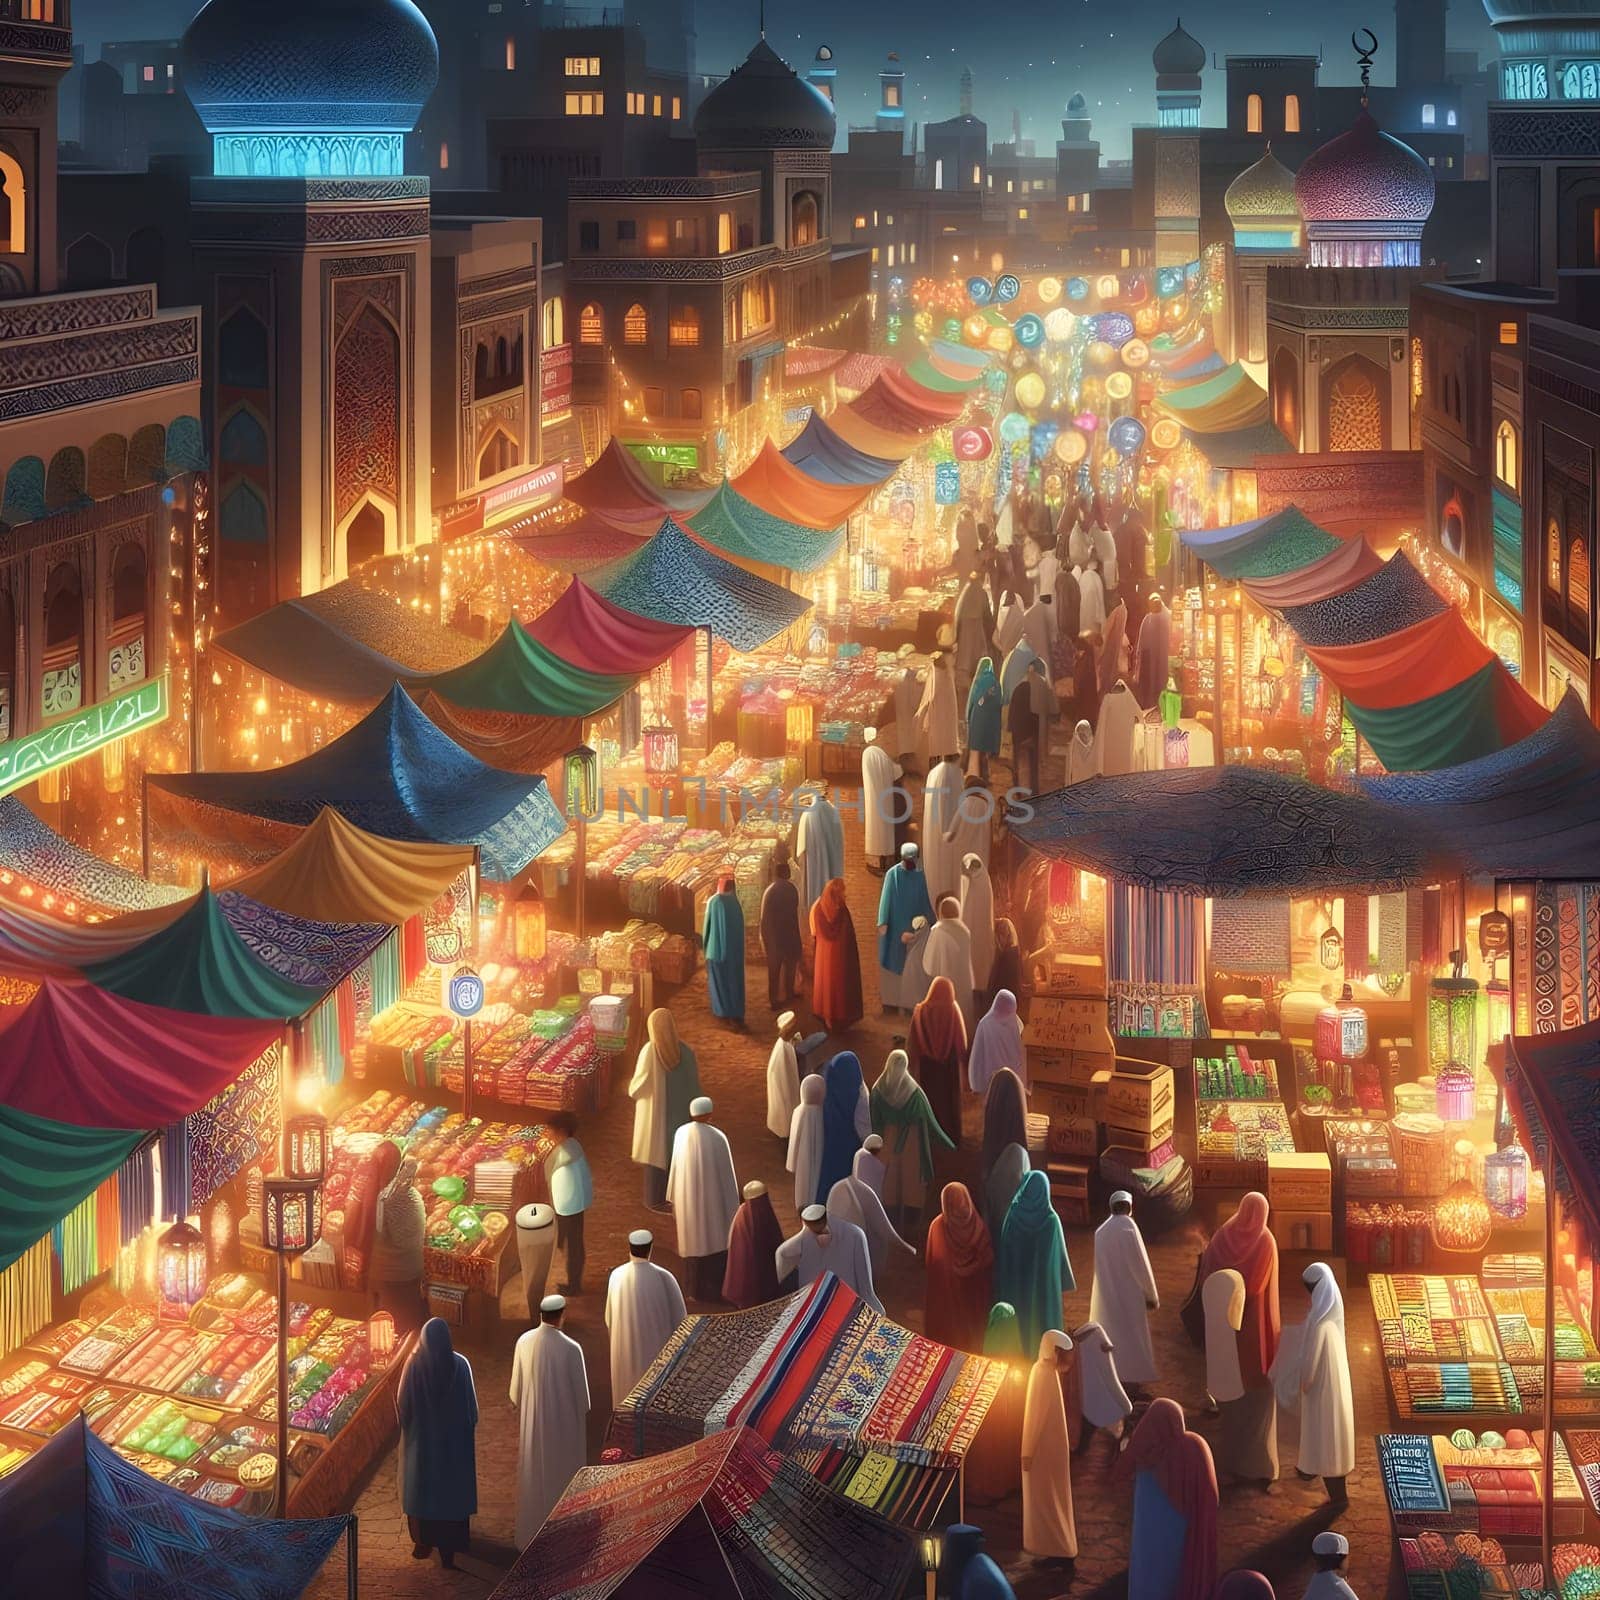 A bustling Ramadan night market scene with vibrant stalls selling colorful fabrics, sweets, and lanterns. Happy ramadan, ramadhan, ramazan by Designlab